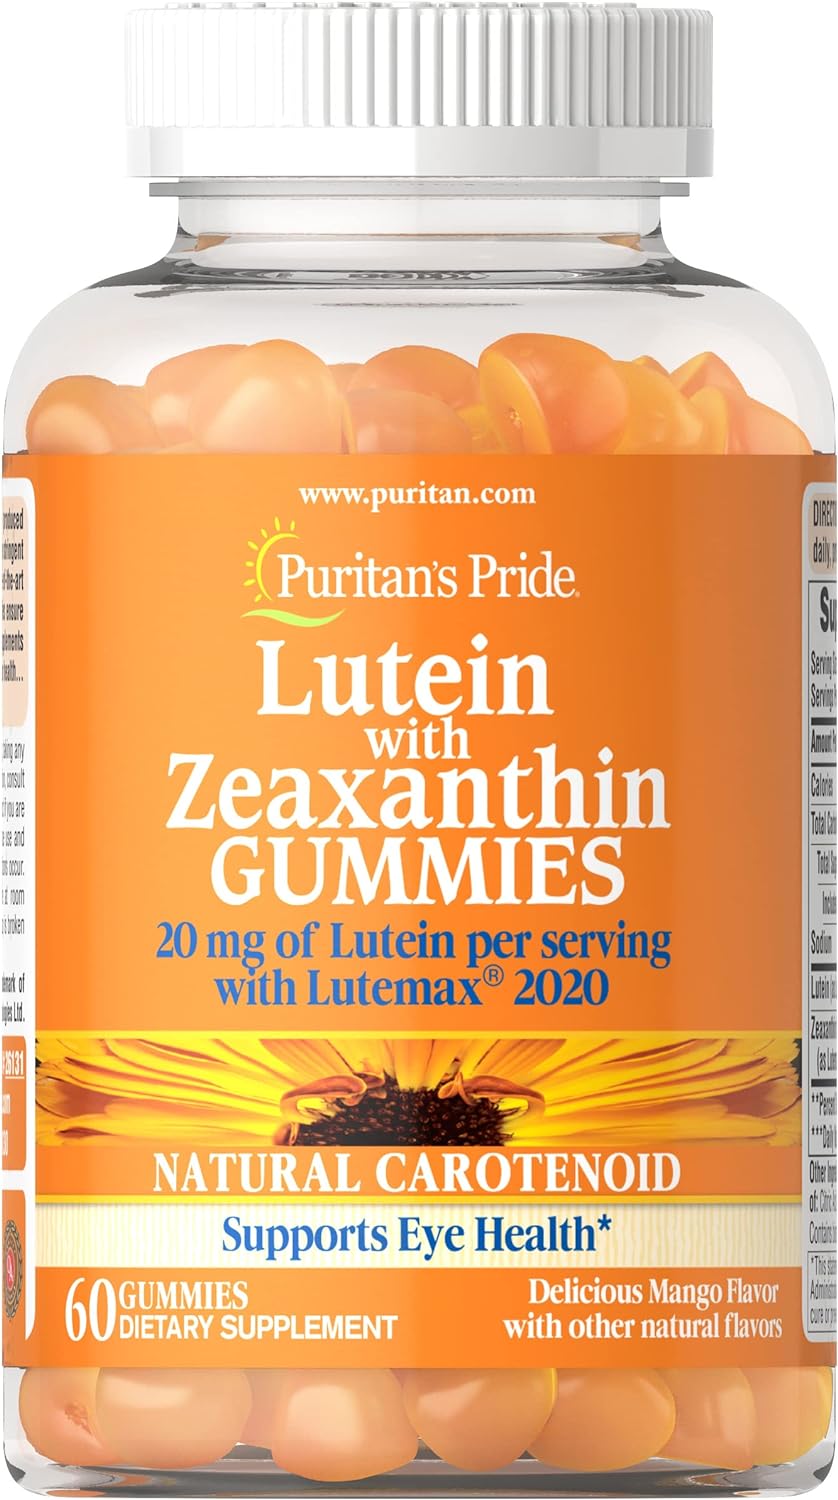 Puritan's Pride Lutein with Zeaxanthin Gummies, Supports Eye Health, 6